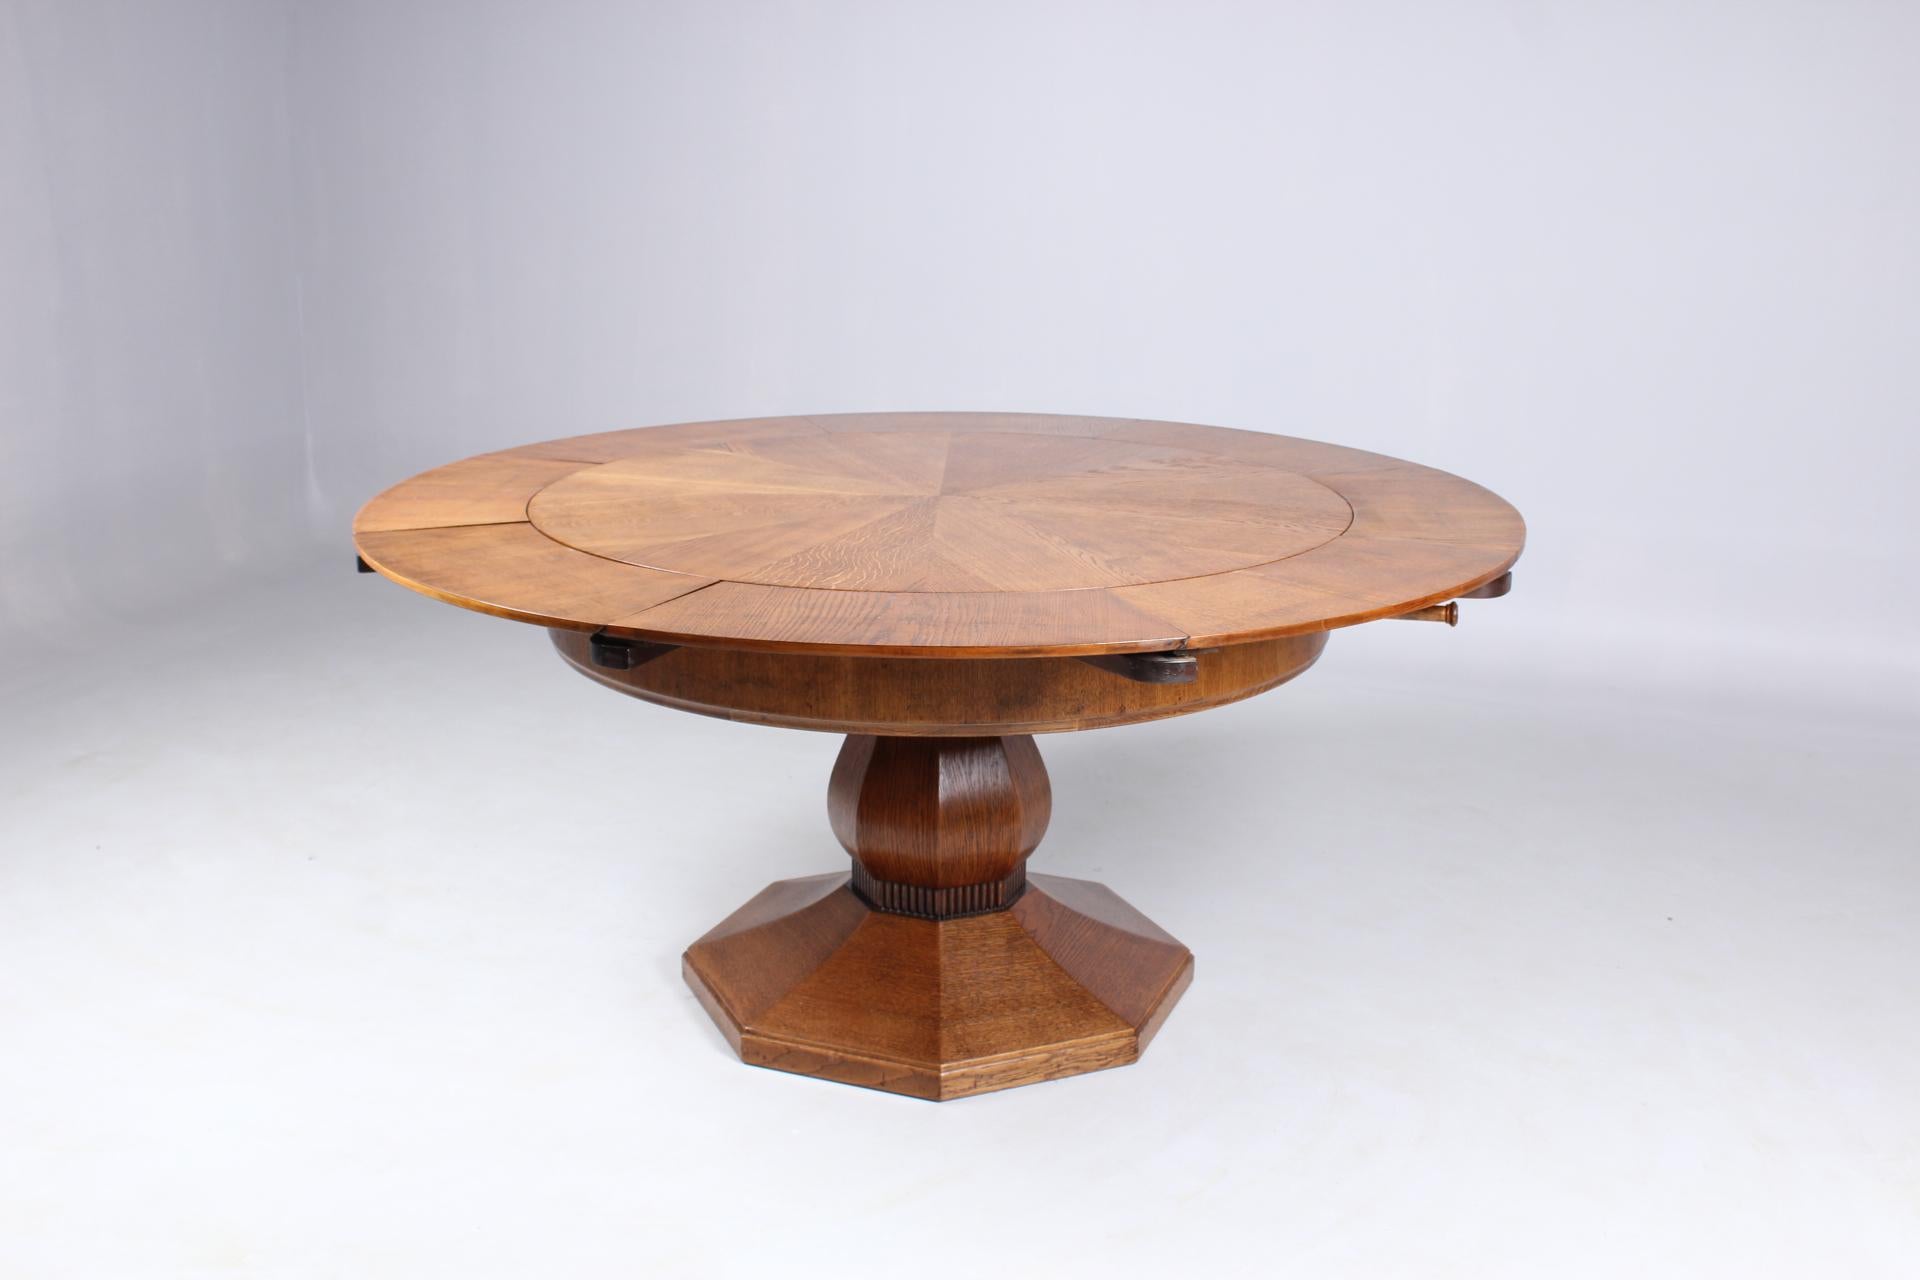 Art Deco Round Oak Dining Table, Very Rare Enlarging Mechanism, Patented in 1920